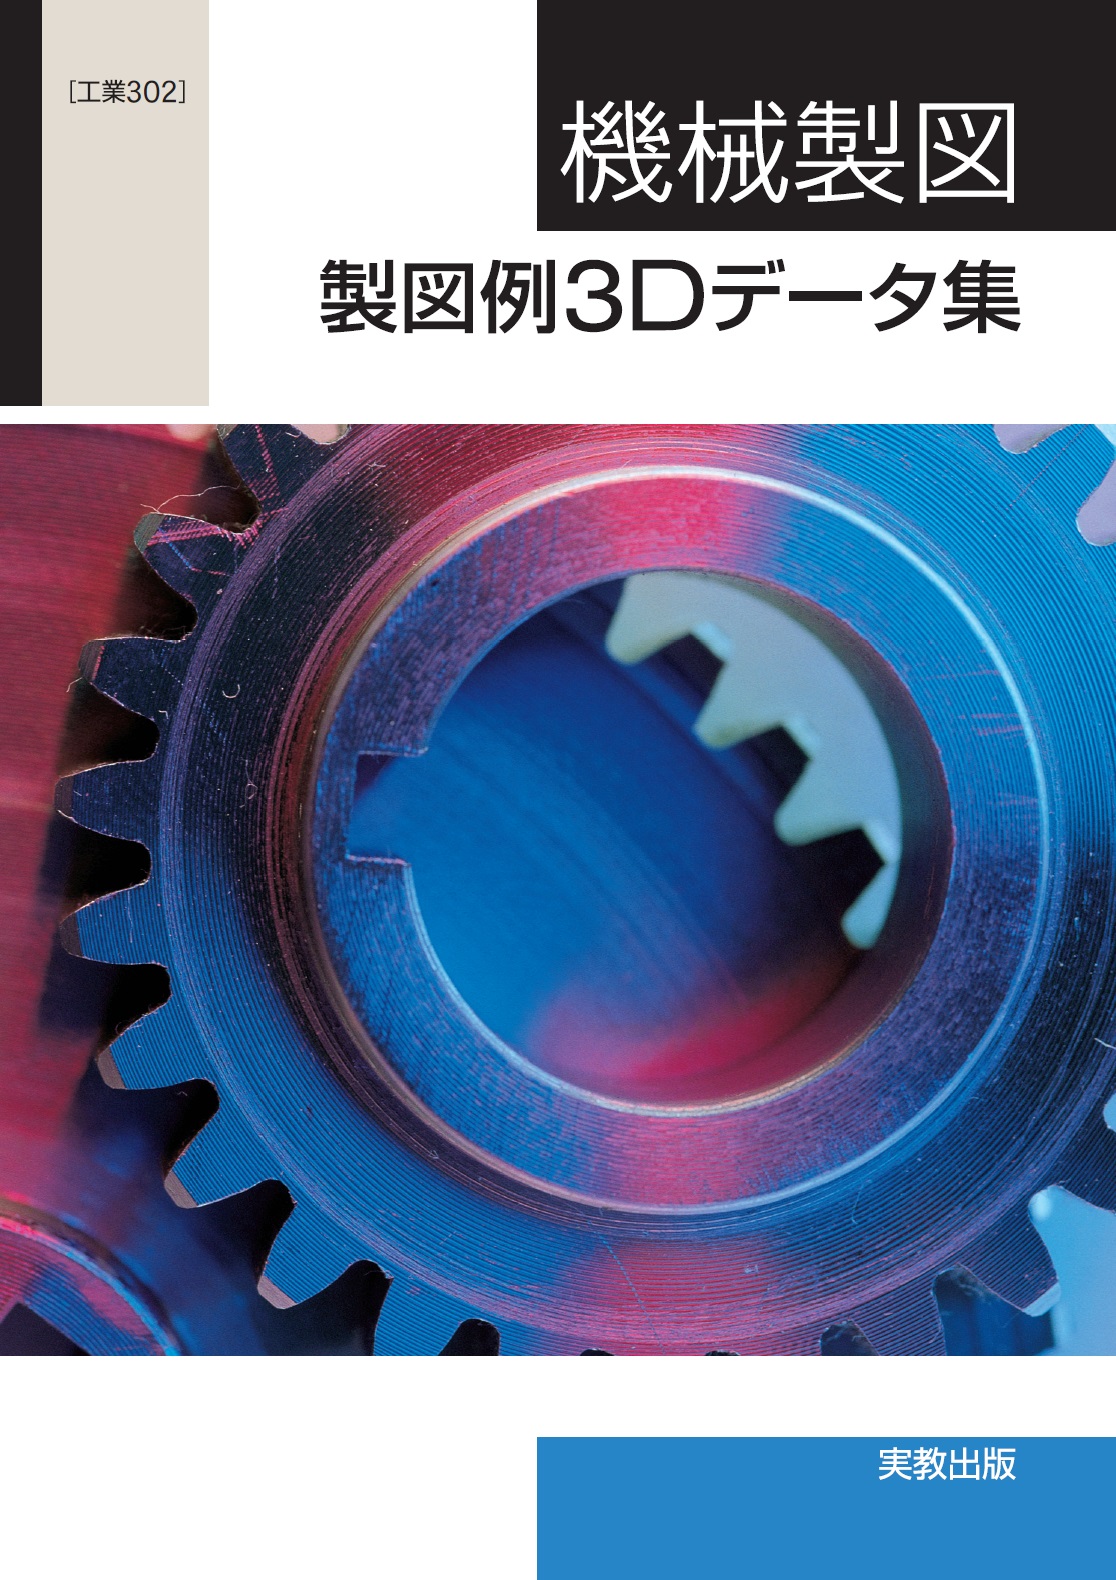 工業302 機械製図 製図例3Dデータ集DVD-ROM